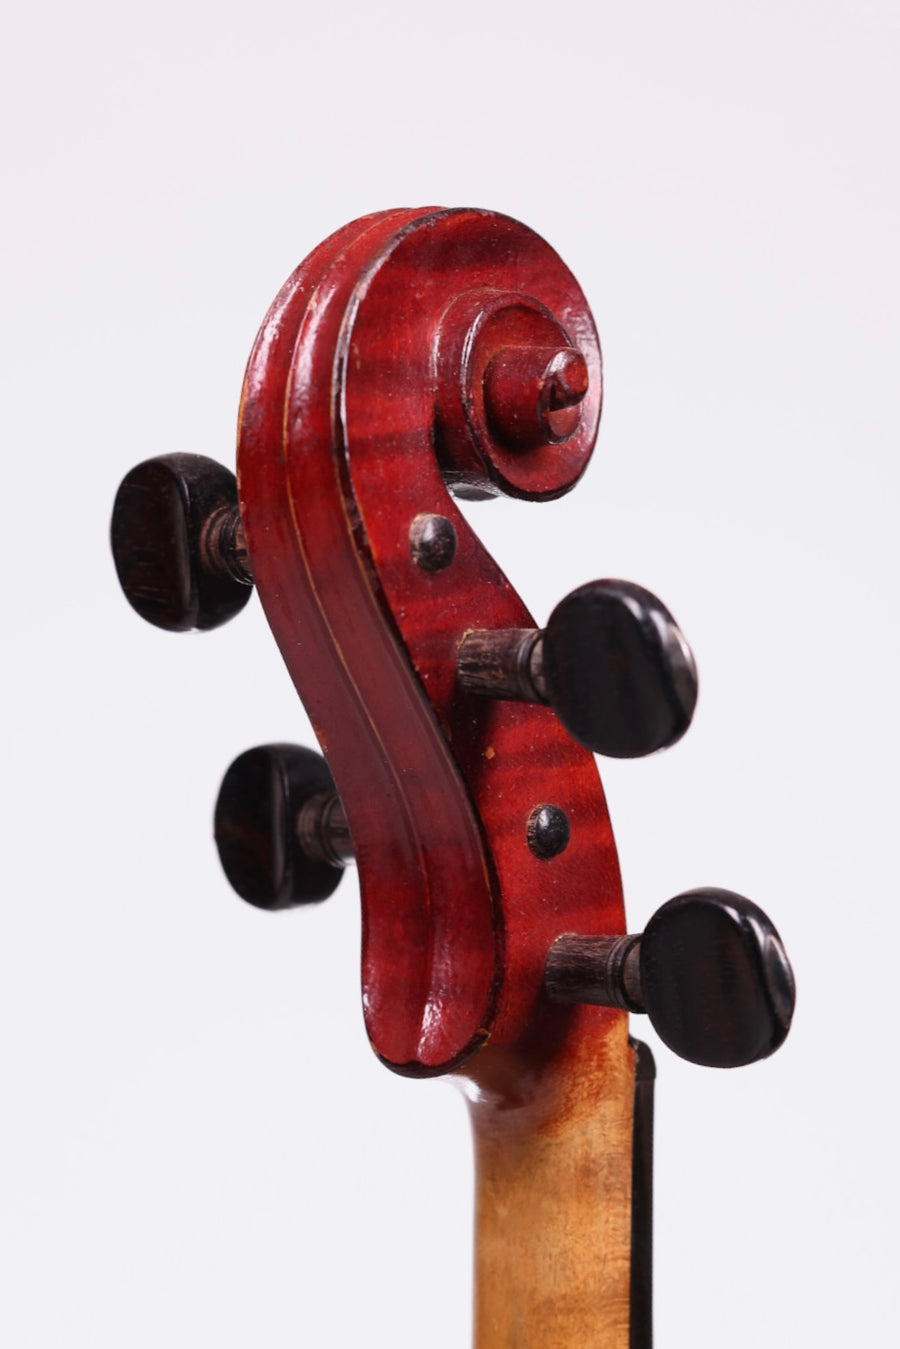 Acoulon & Blondelet “Sarasate” Violin From JTL, Circa 1908-1914.